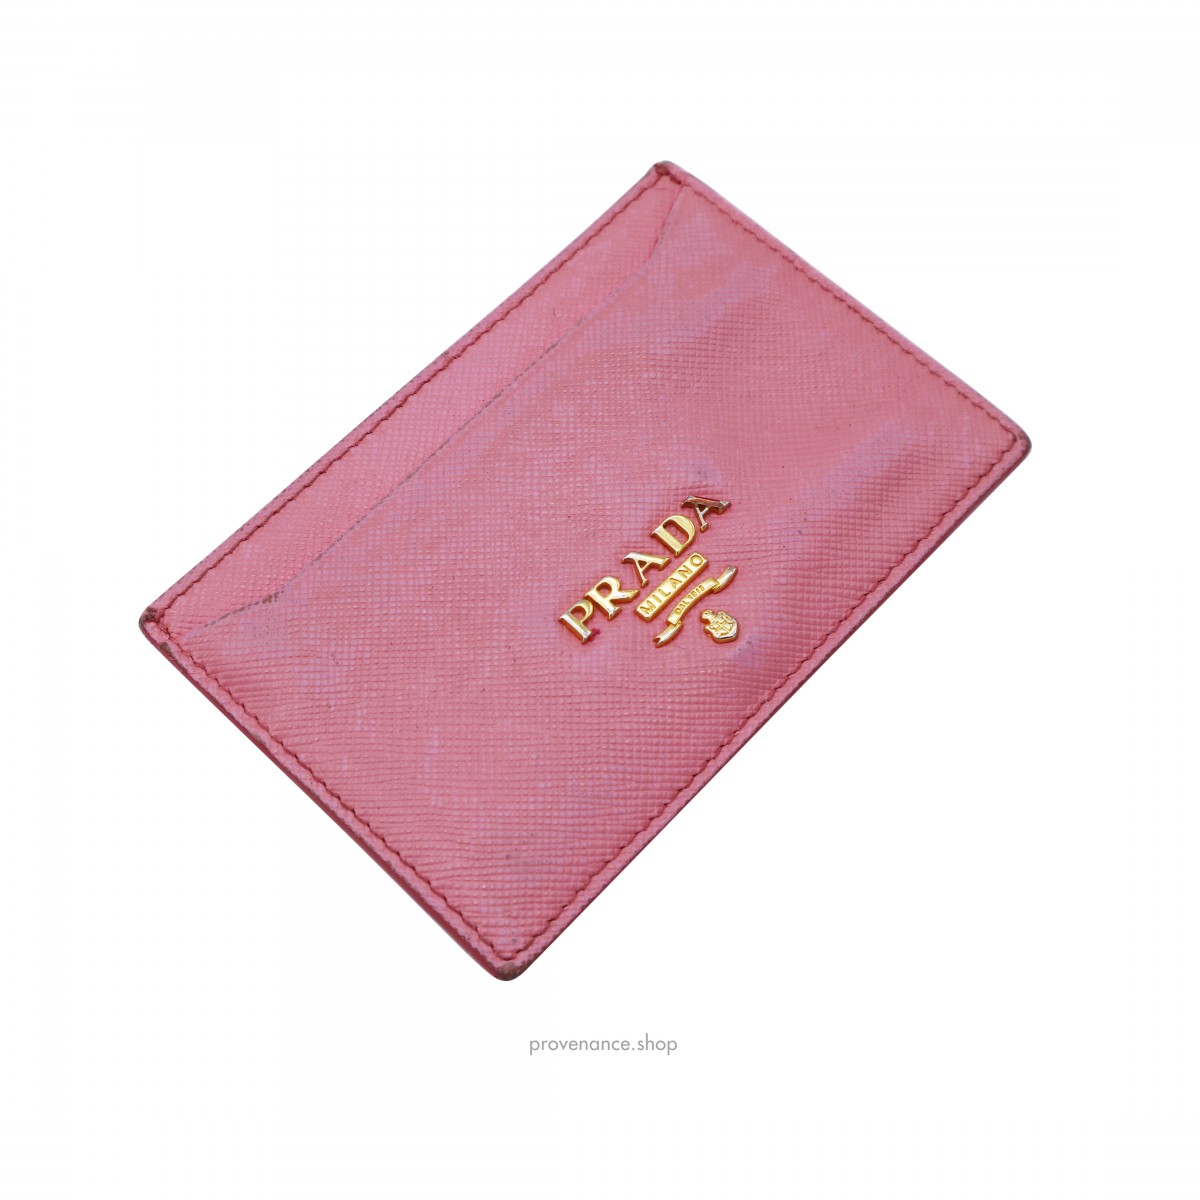 Prada Cardholder Wallet - Pink Saffiano Leather - 3